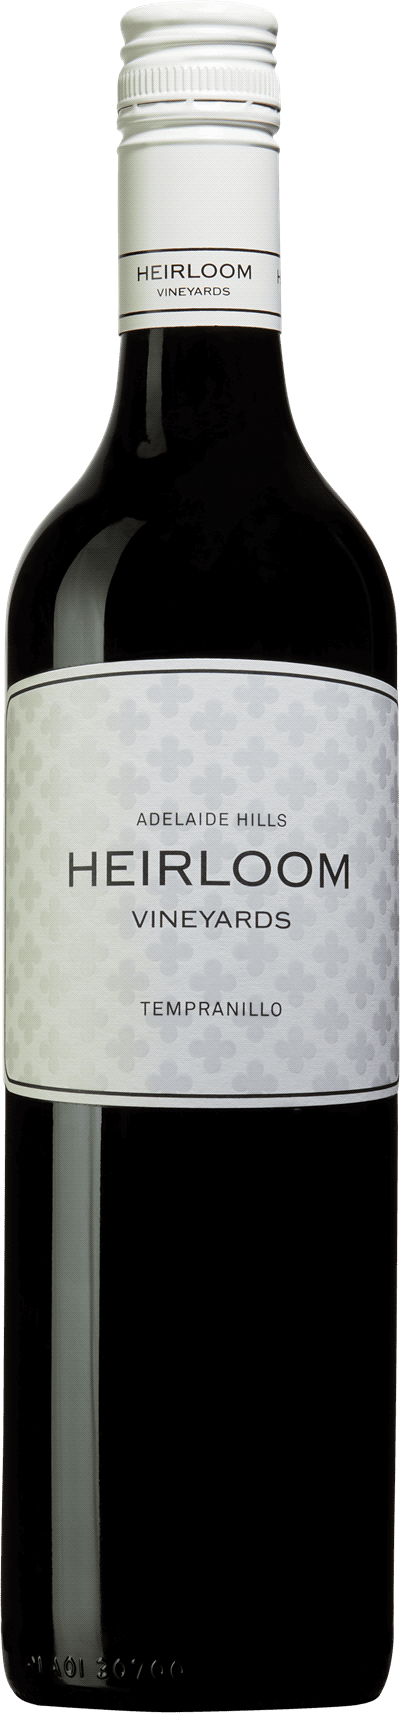 Heirloom Vineyards Adelaide Hills Tempranillo, 2021